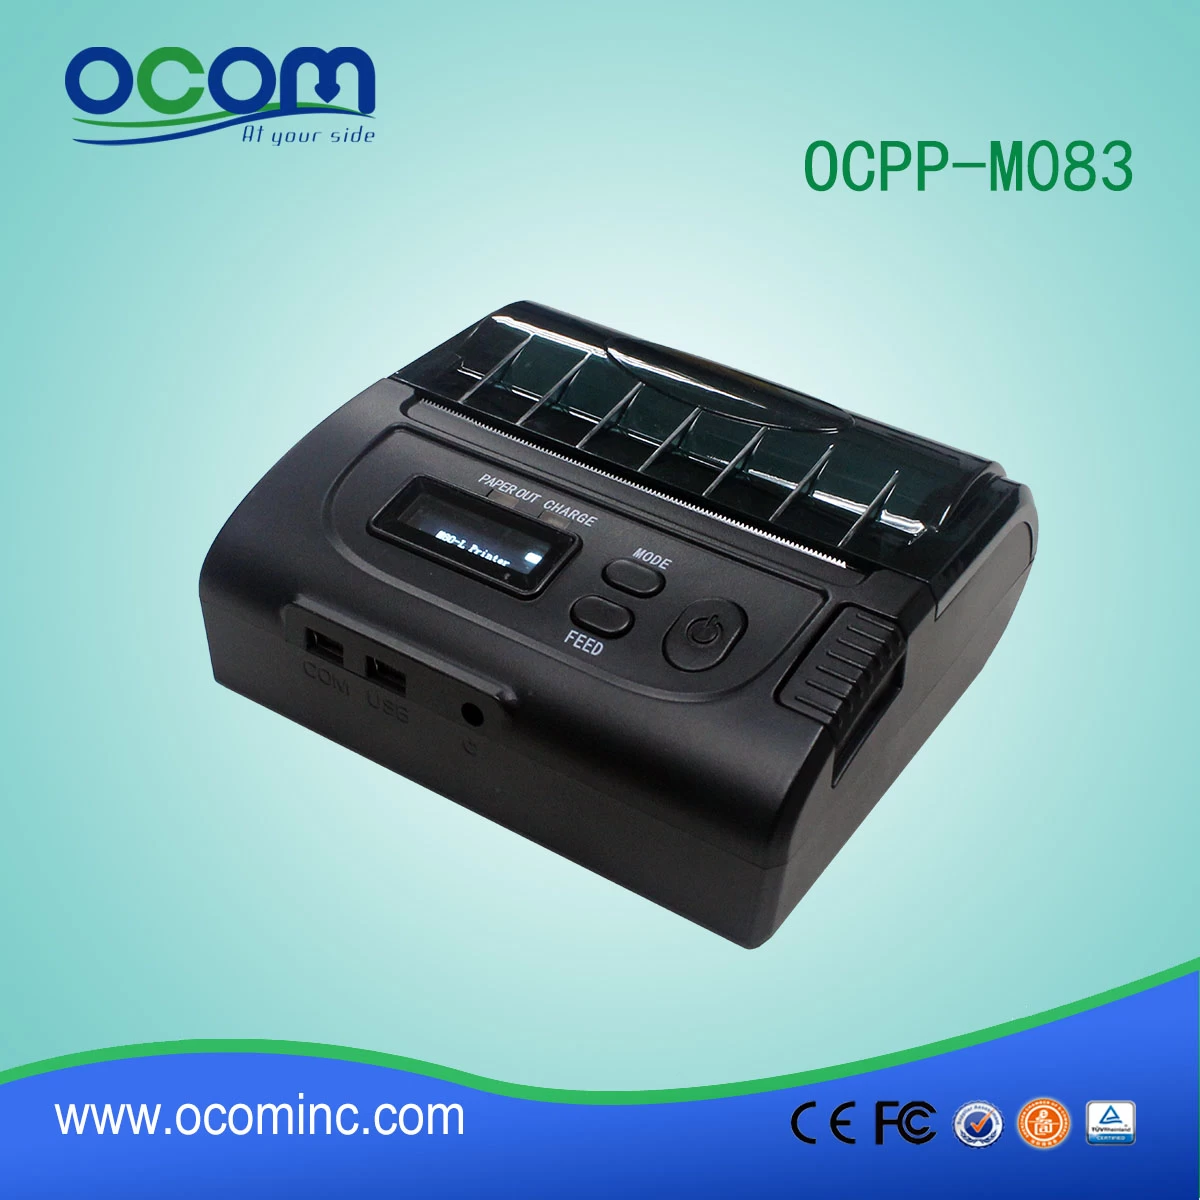 OCPP-M083 80mm handheld mobile bluetooth printer support IOS